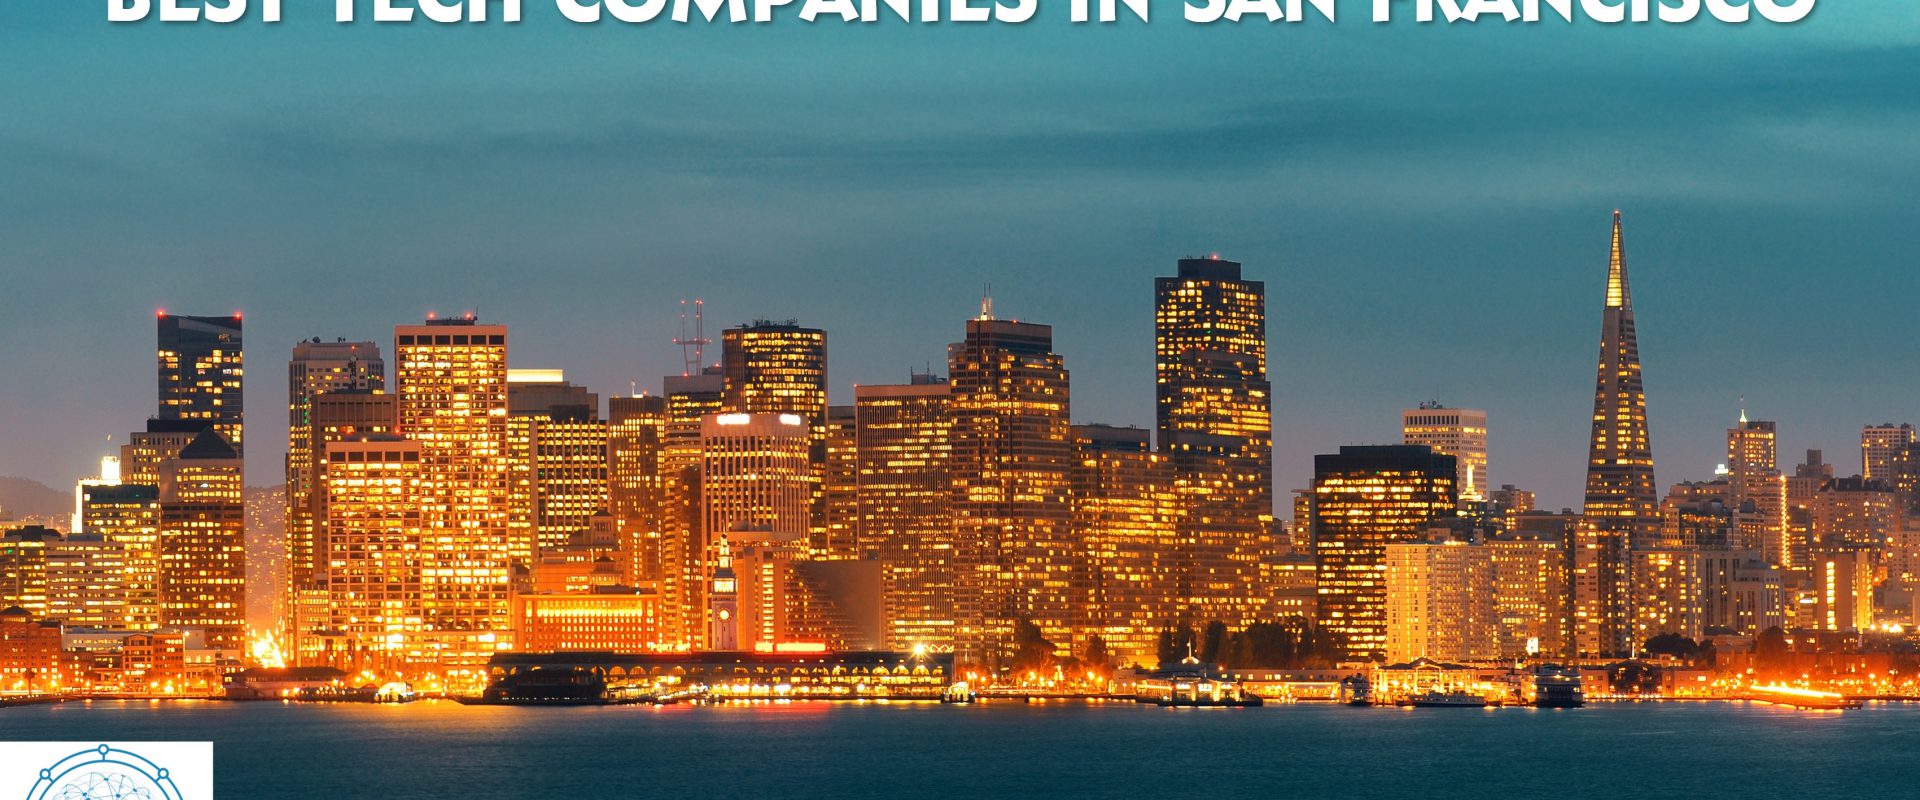 Best Tech Companies San Francisco